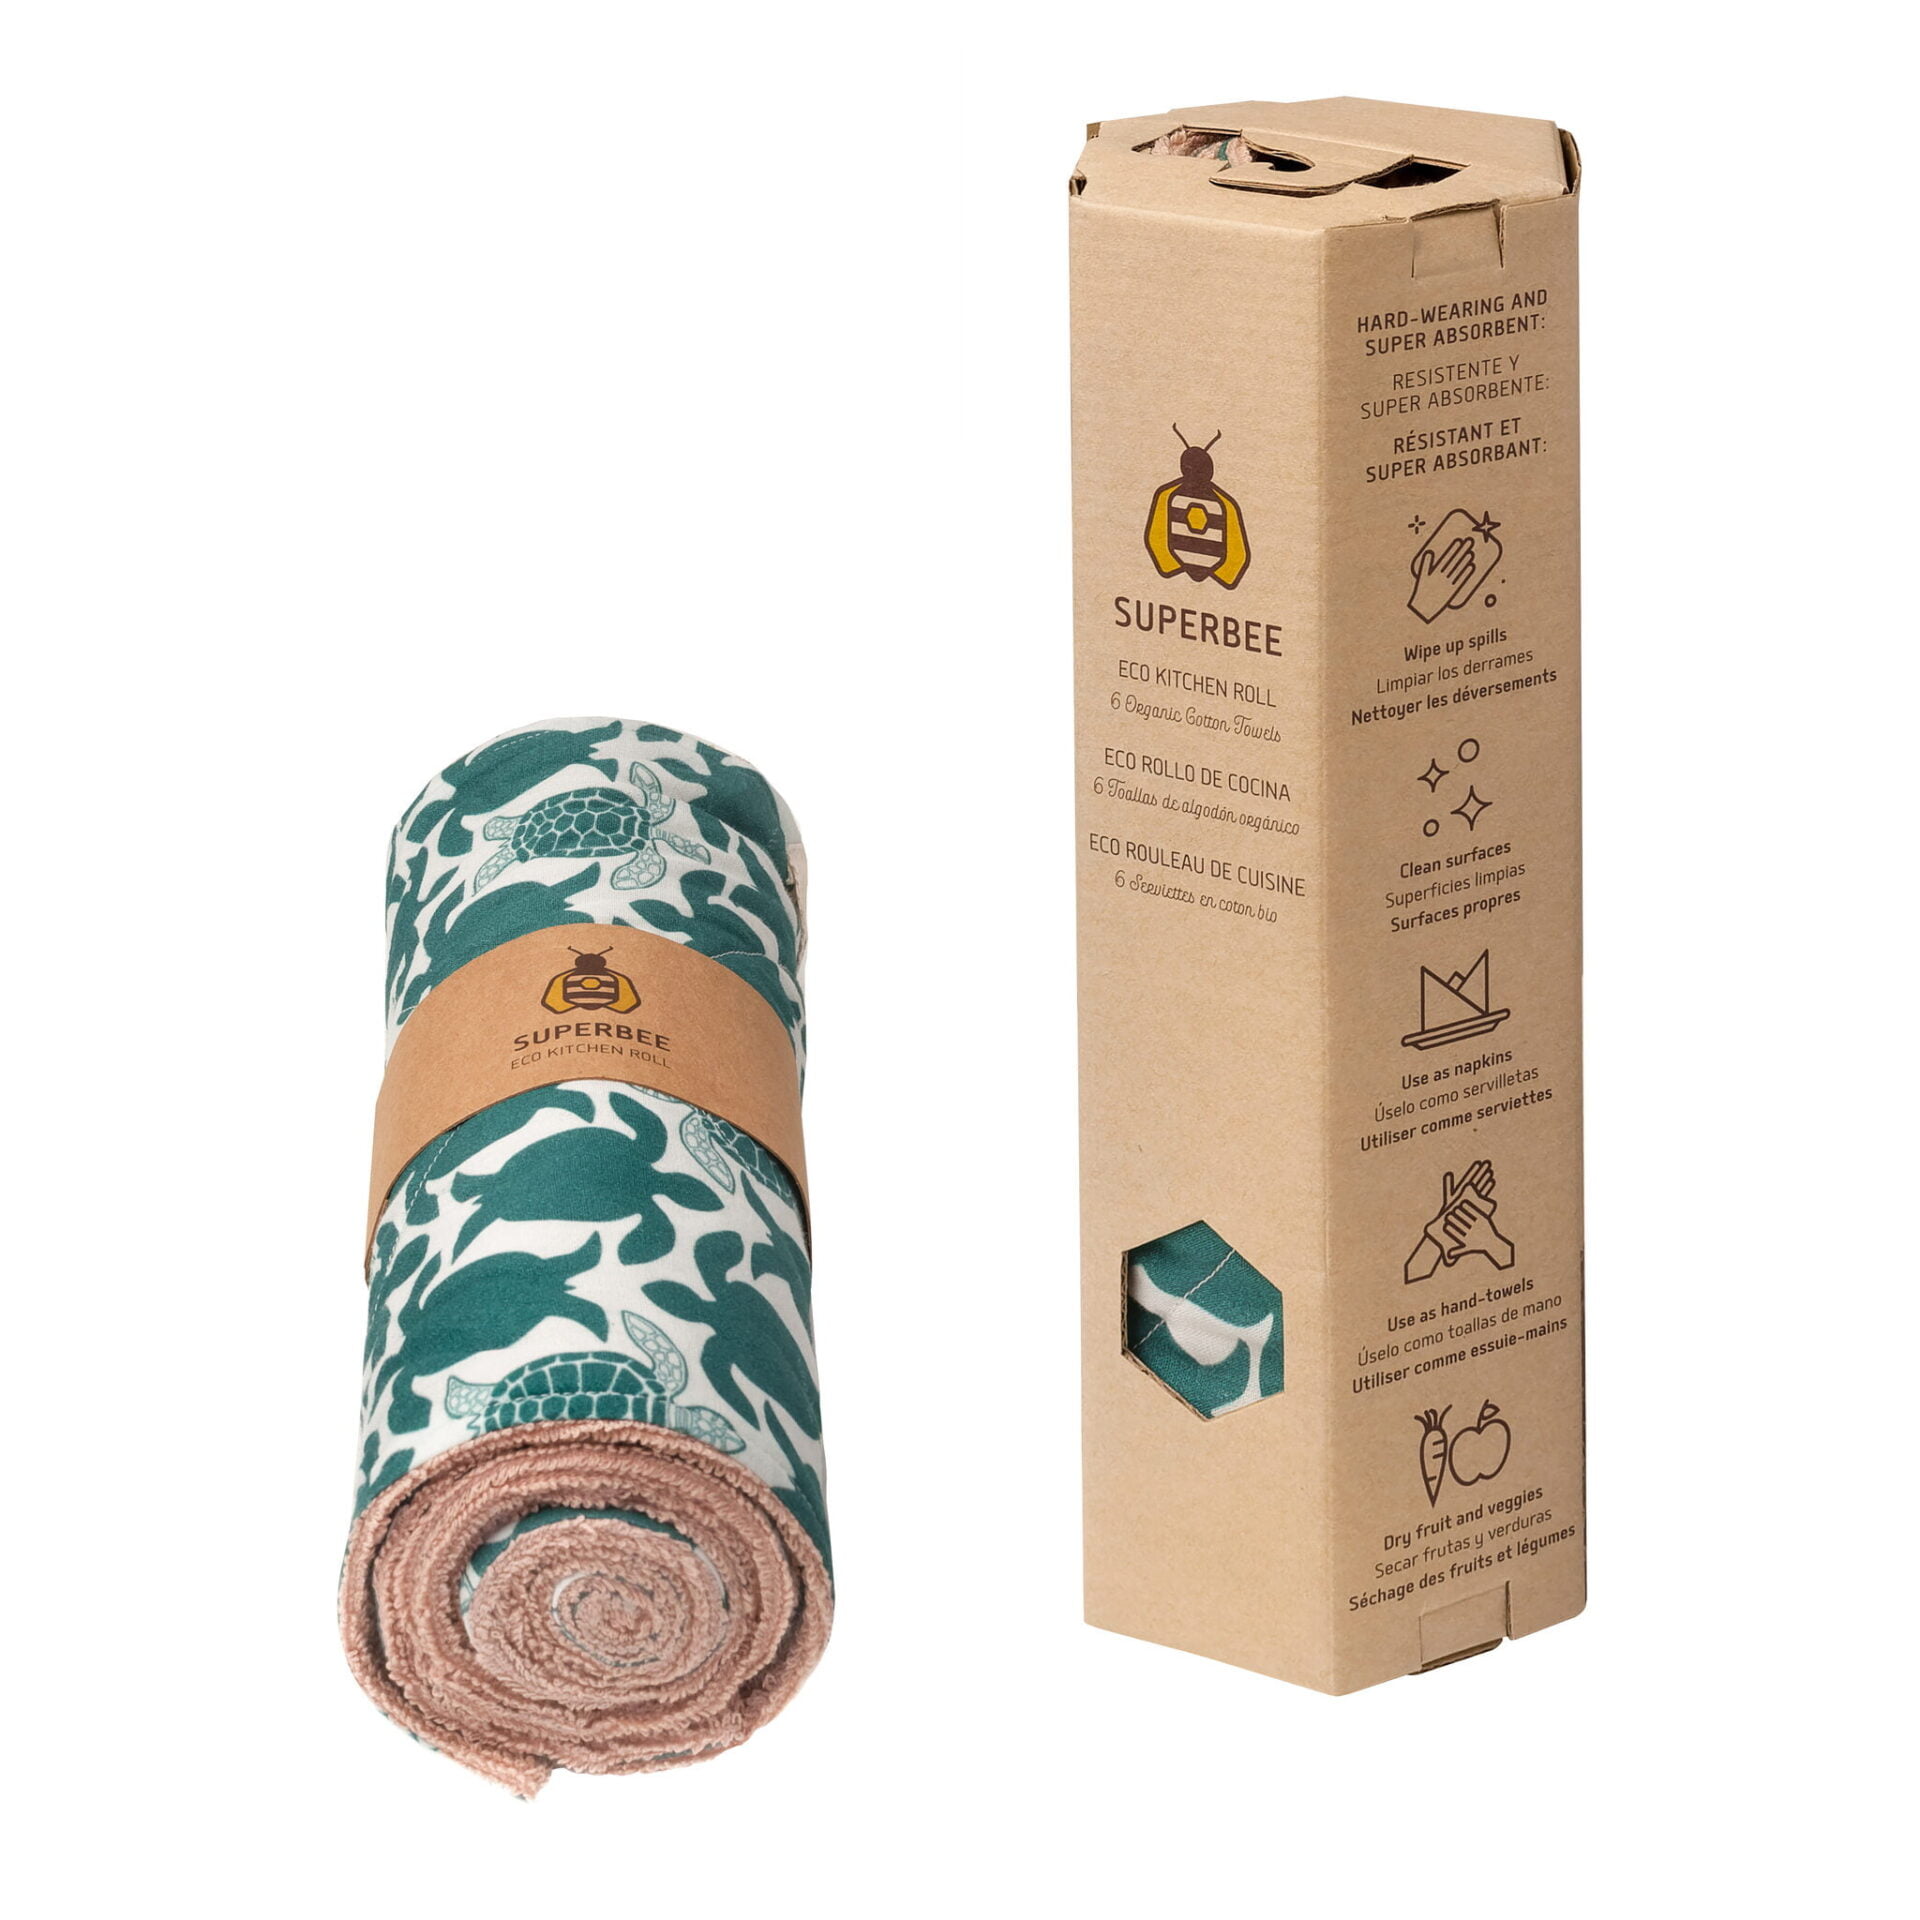 50 pieces/rolls disposable reusable kitchen rolls kitchen cloth rolls